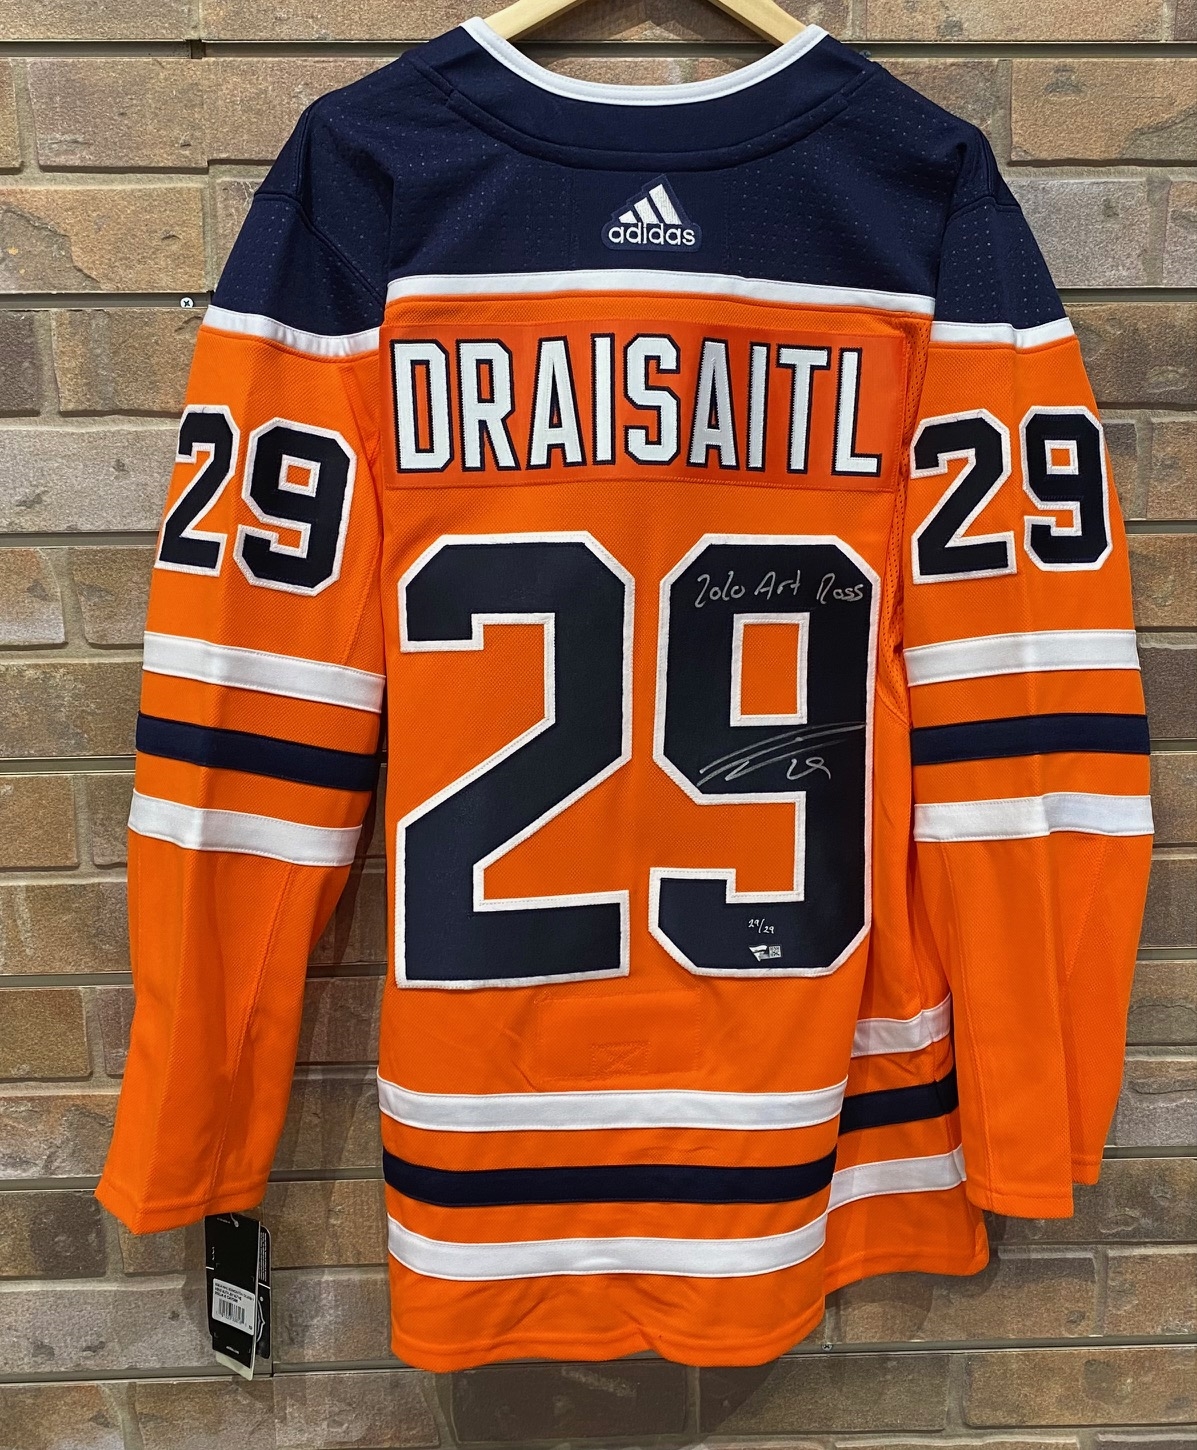 Leon Draisaitl Edmonton Oilers Signed 2020 Art Ross Adidas Jersey #29/29 